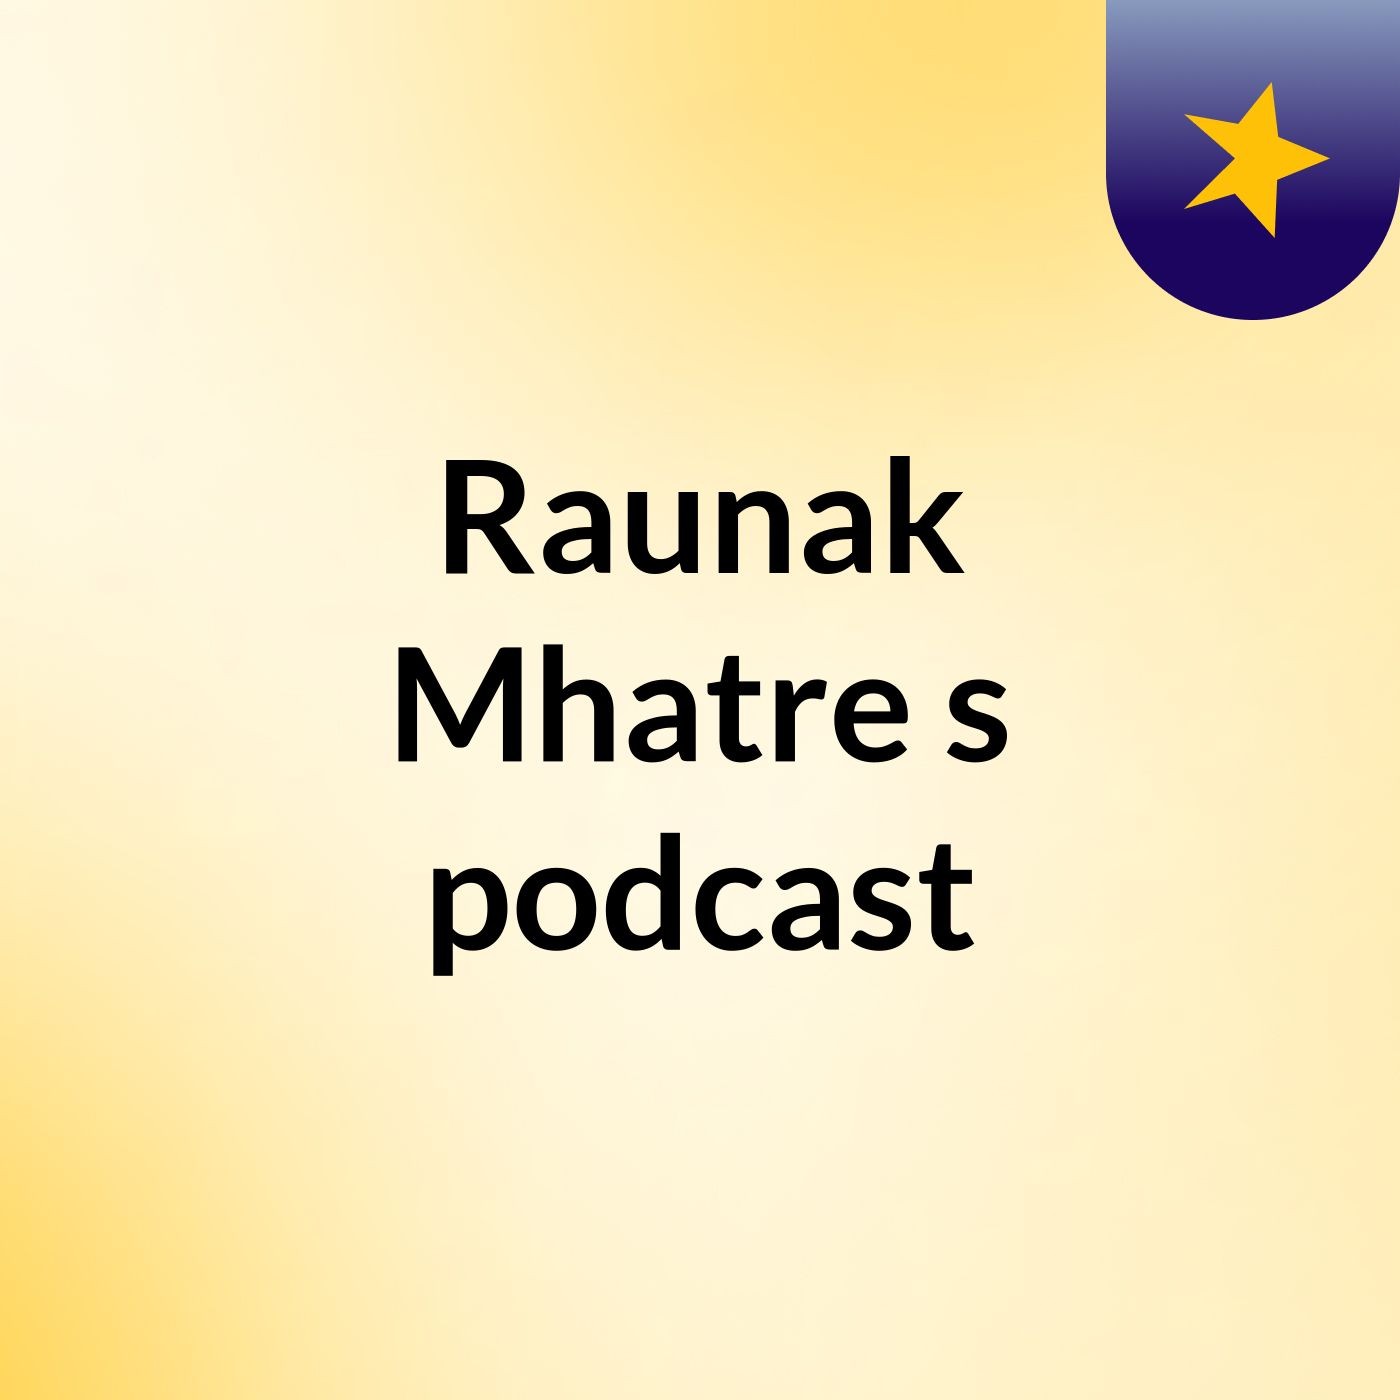 Raunak Mhatre's podcast